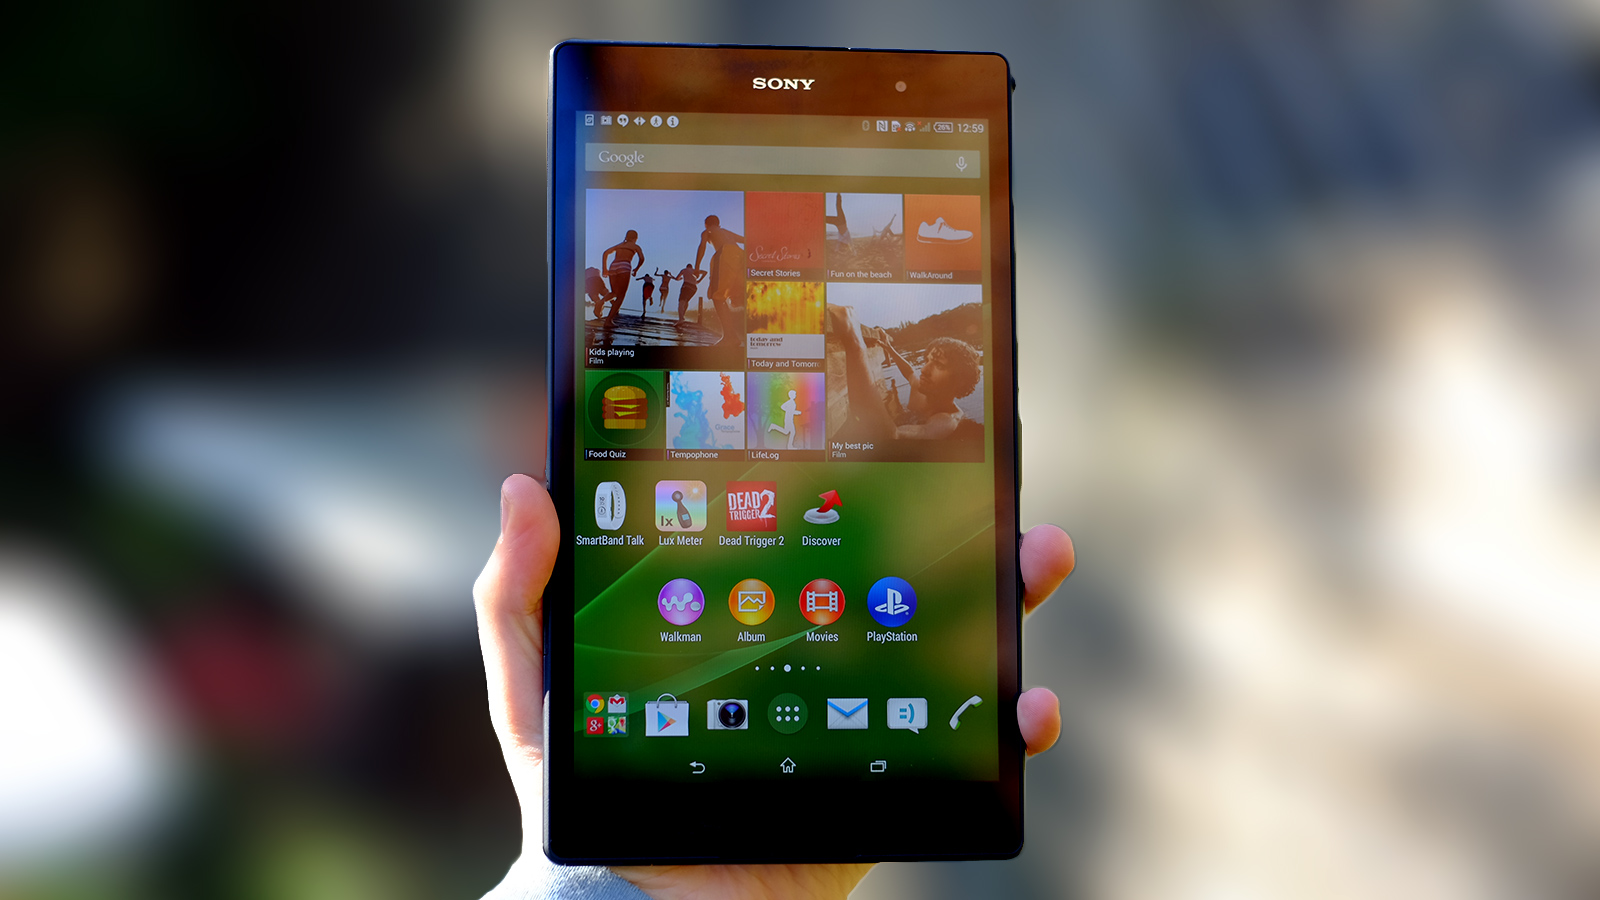 Sony Xperia Z3 Tablet Compact review | TechRadar